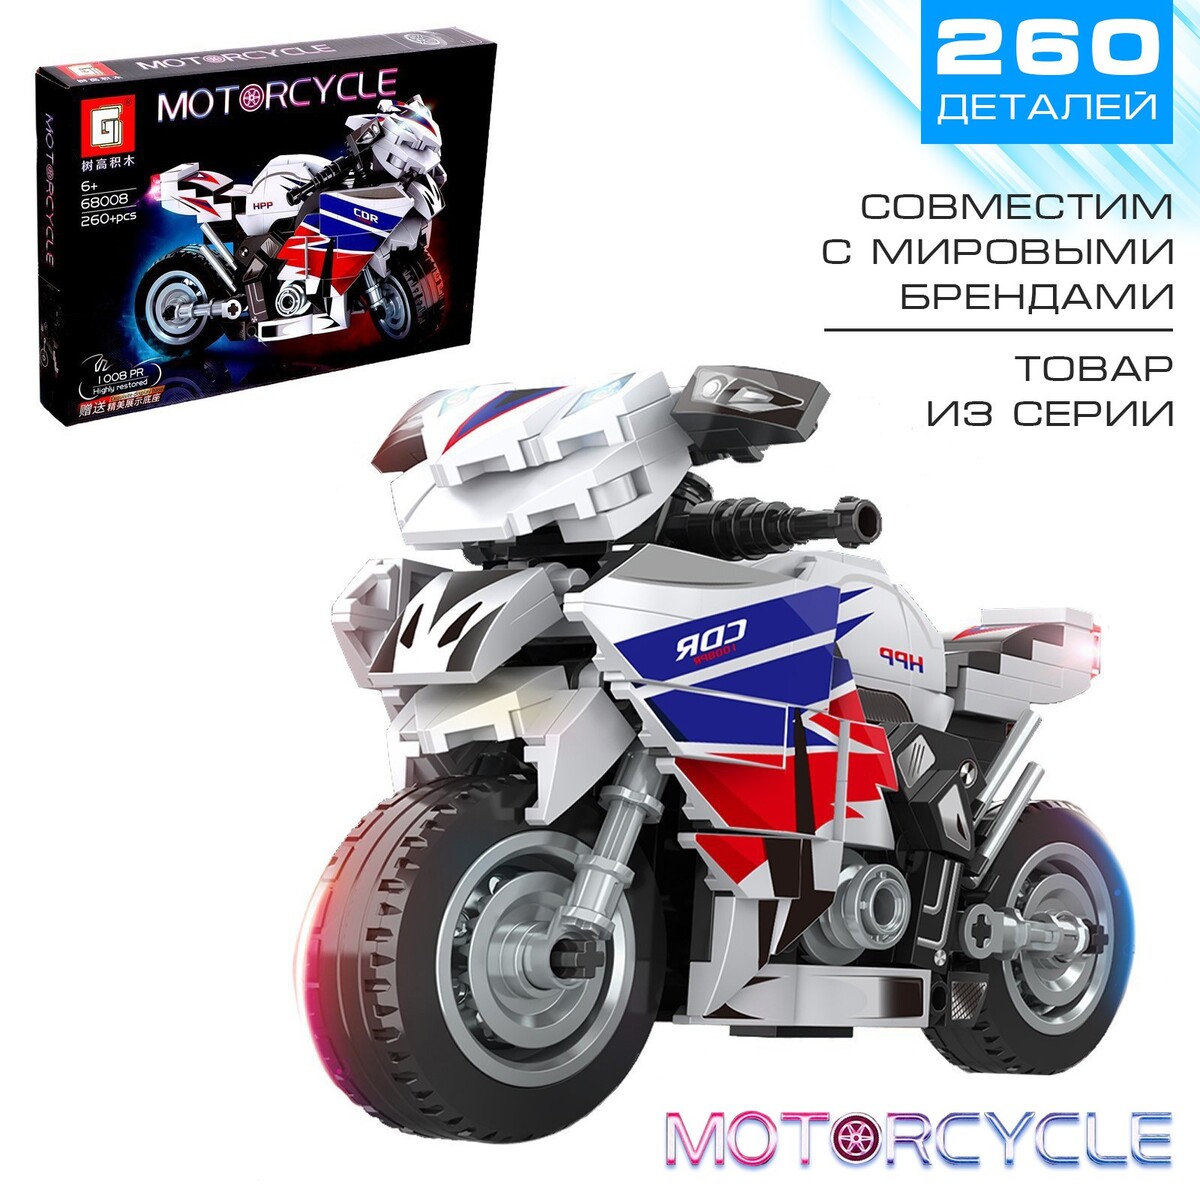 Конструктор мотоцикл motorcycle, 260 деталей 6+ конструктор пластиковый nd play трехколесный мотоцикл 27 деталей